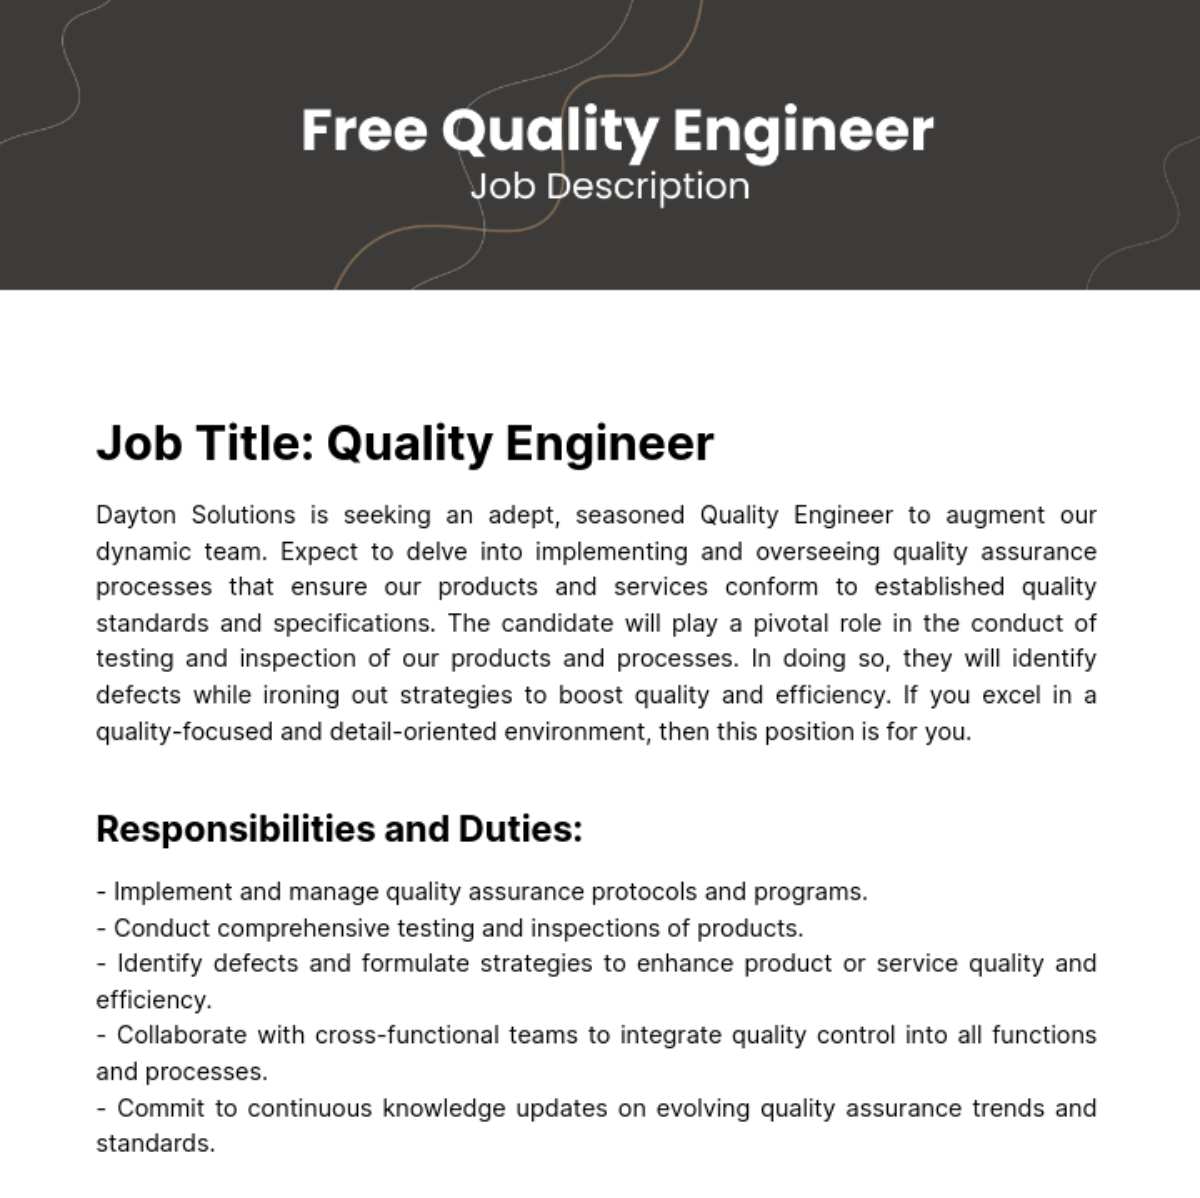 Free Quality Engineer Job Description Template